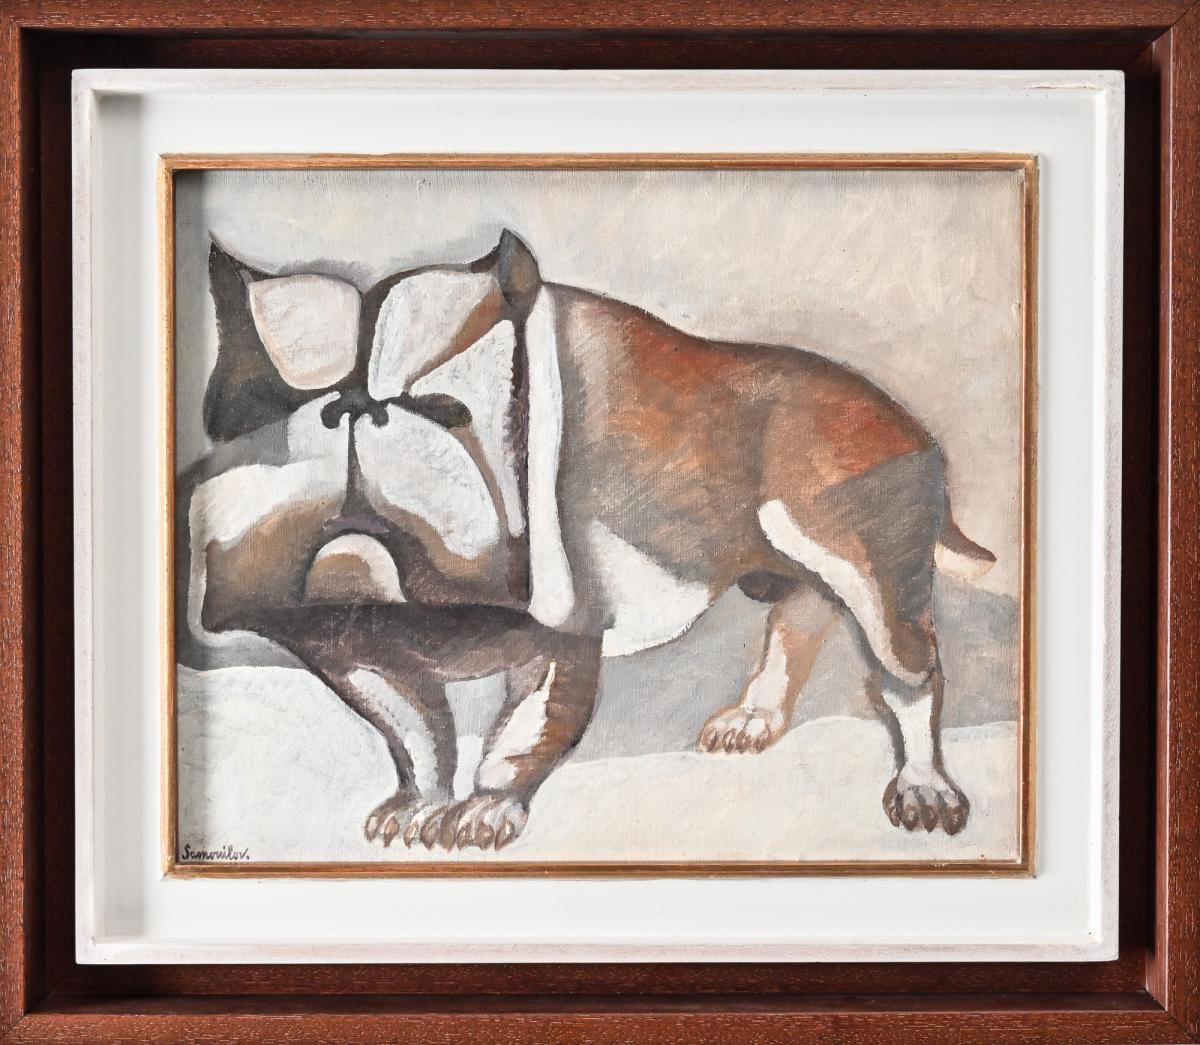 Oil on canvas of a bulldog by Henri Samouilov